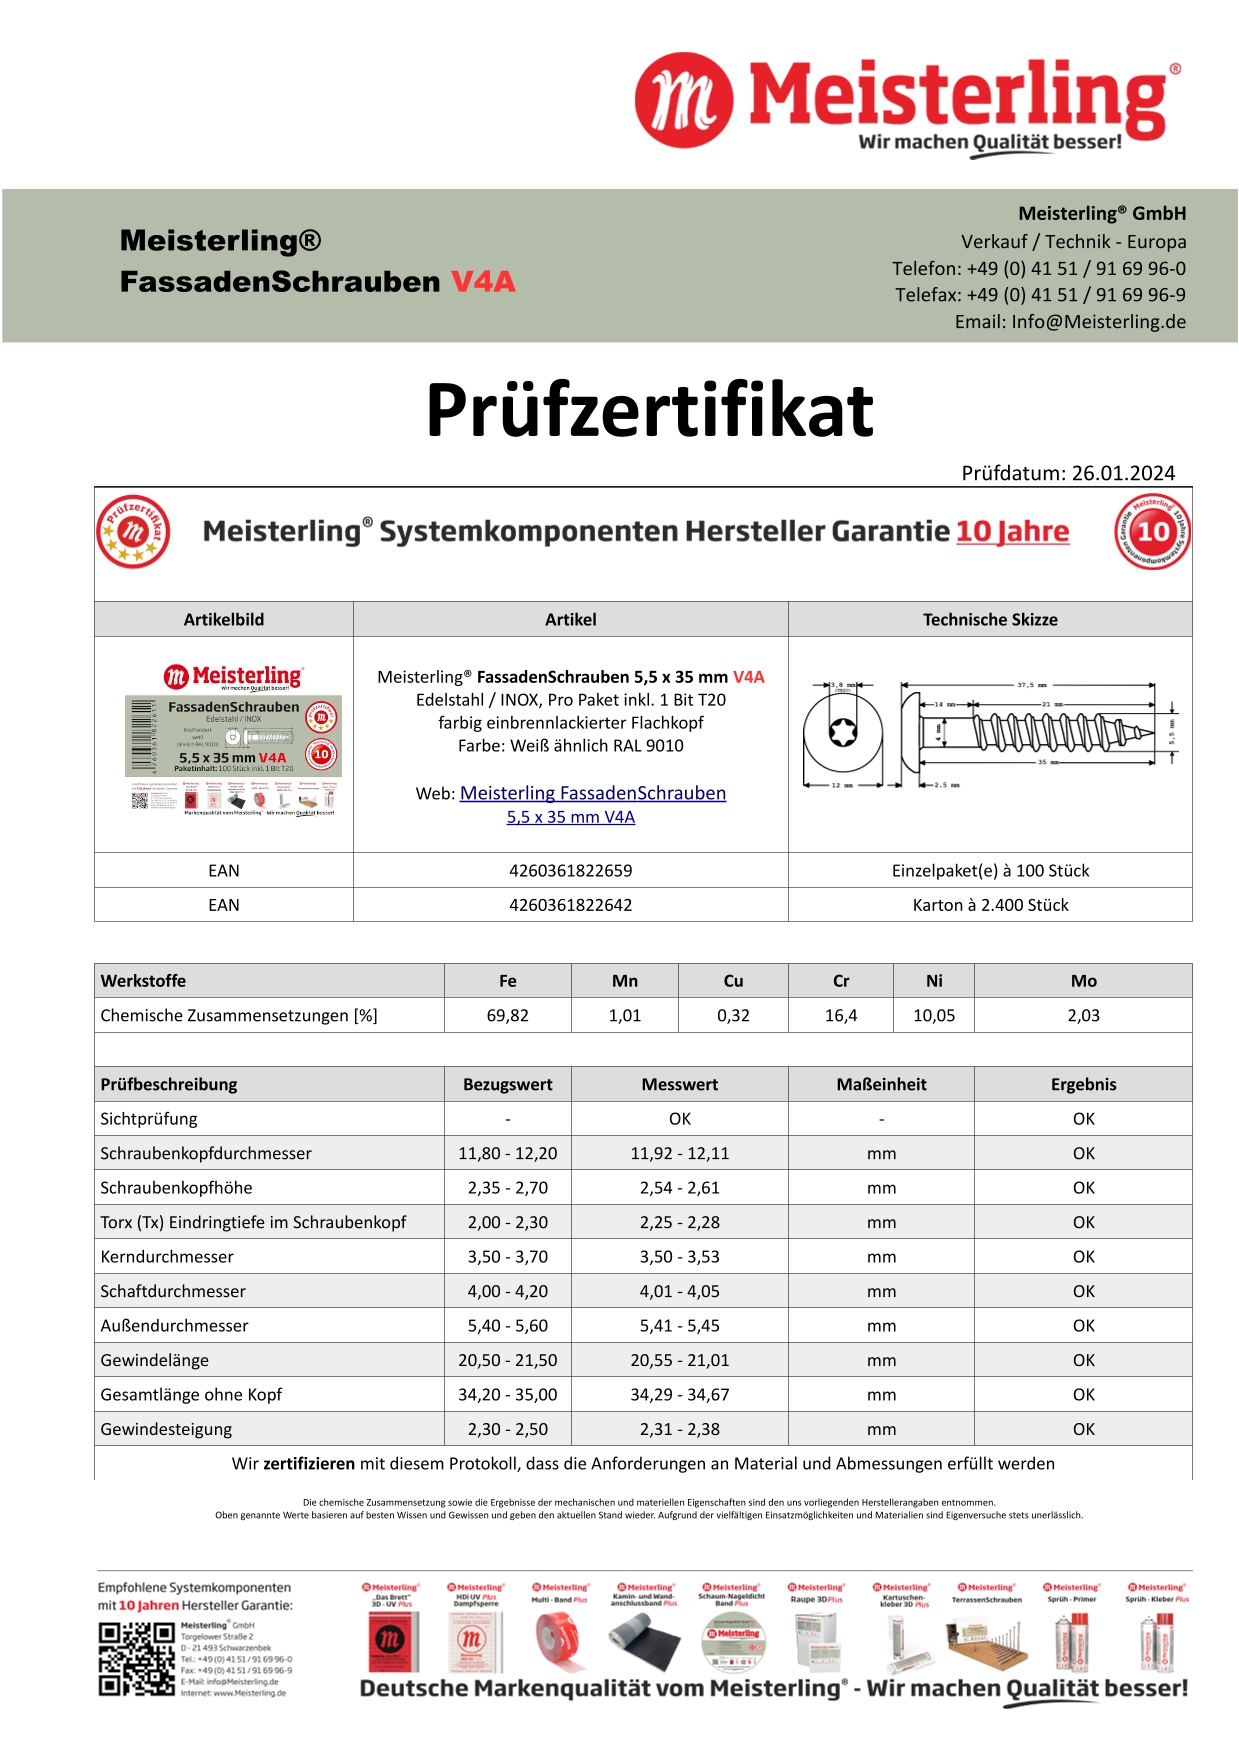 Prüfzertifikat Meisterling® FassadenSchrauben 5,5 x 35 mm V4a weiß